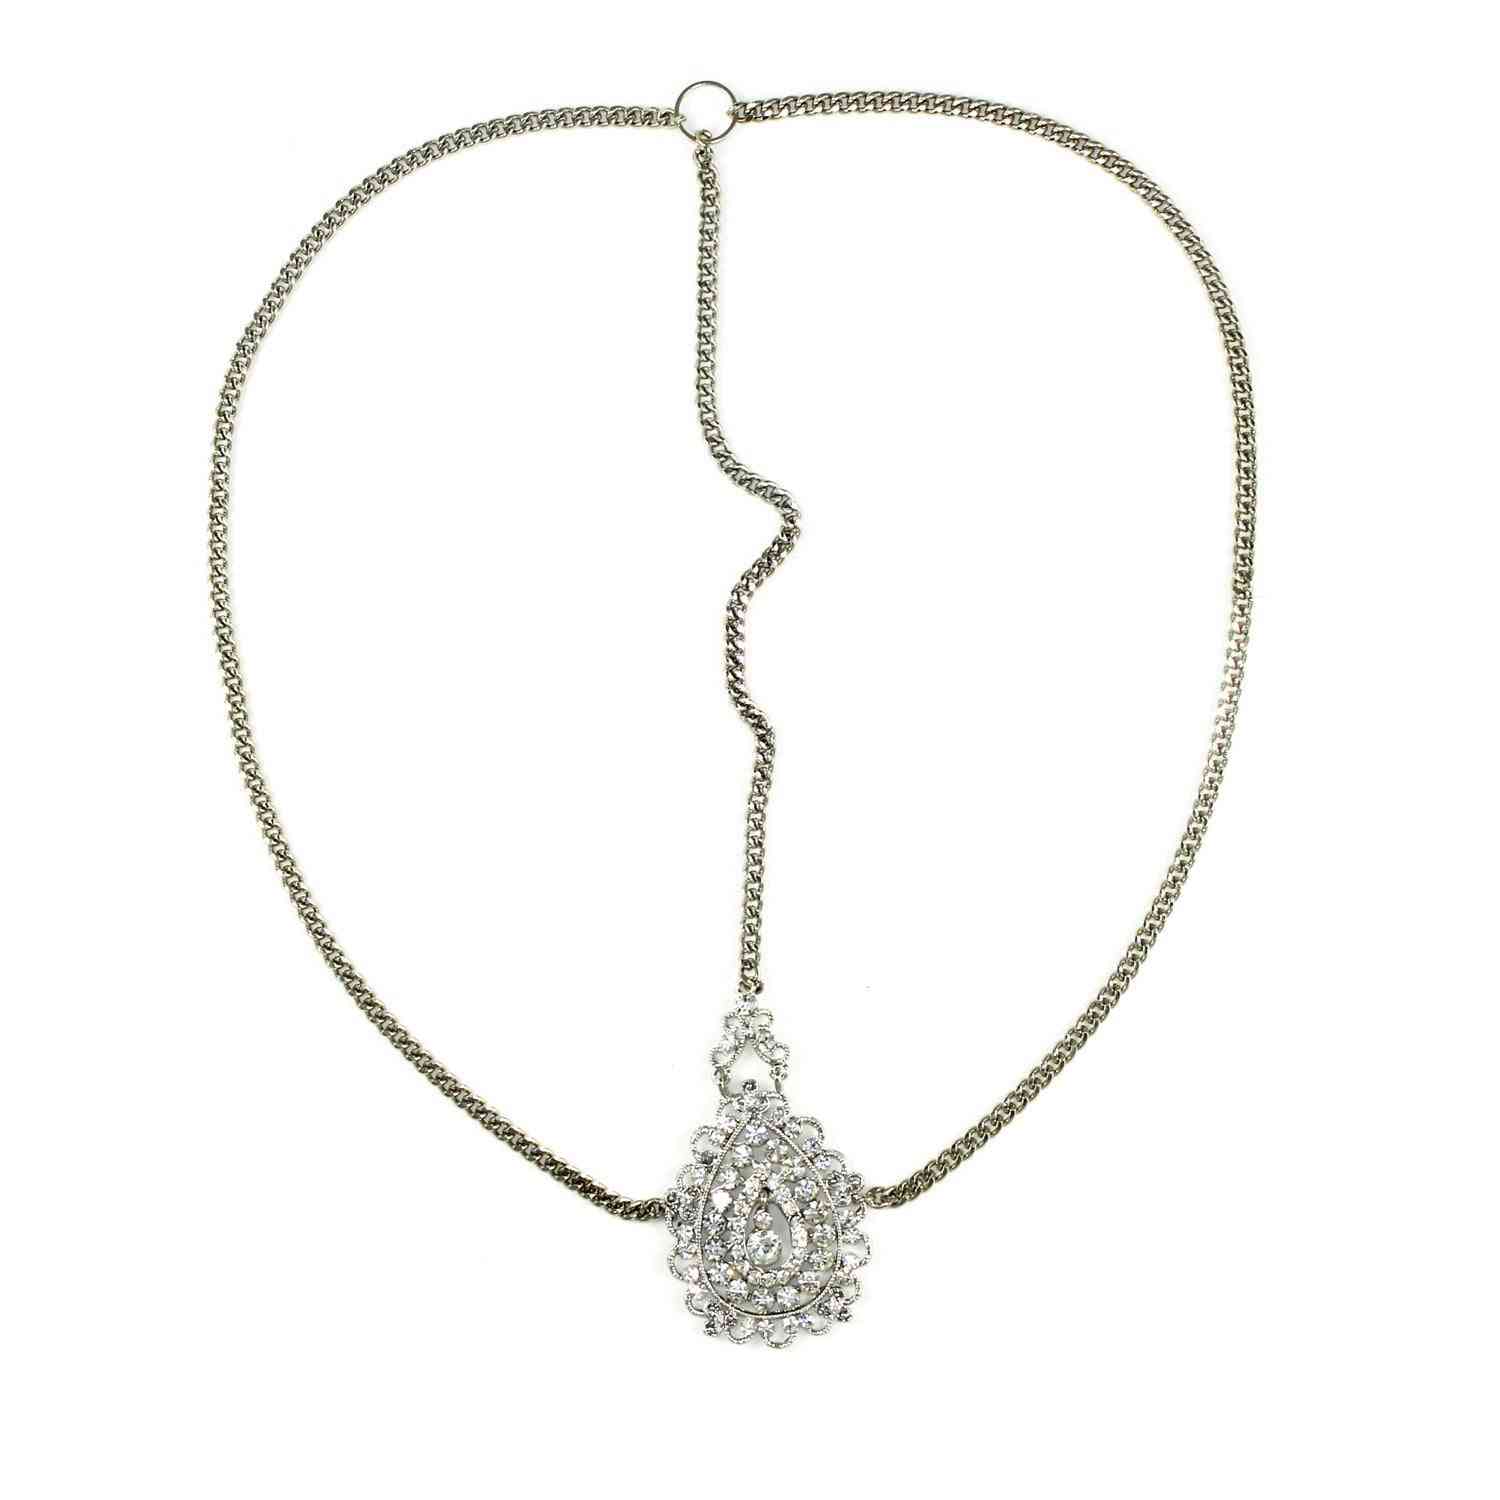 Glass Crystal Rhinestones Chain Headpiece